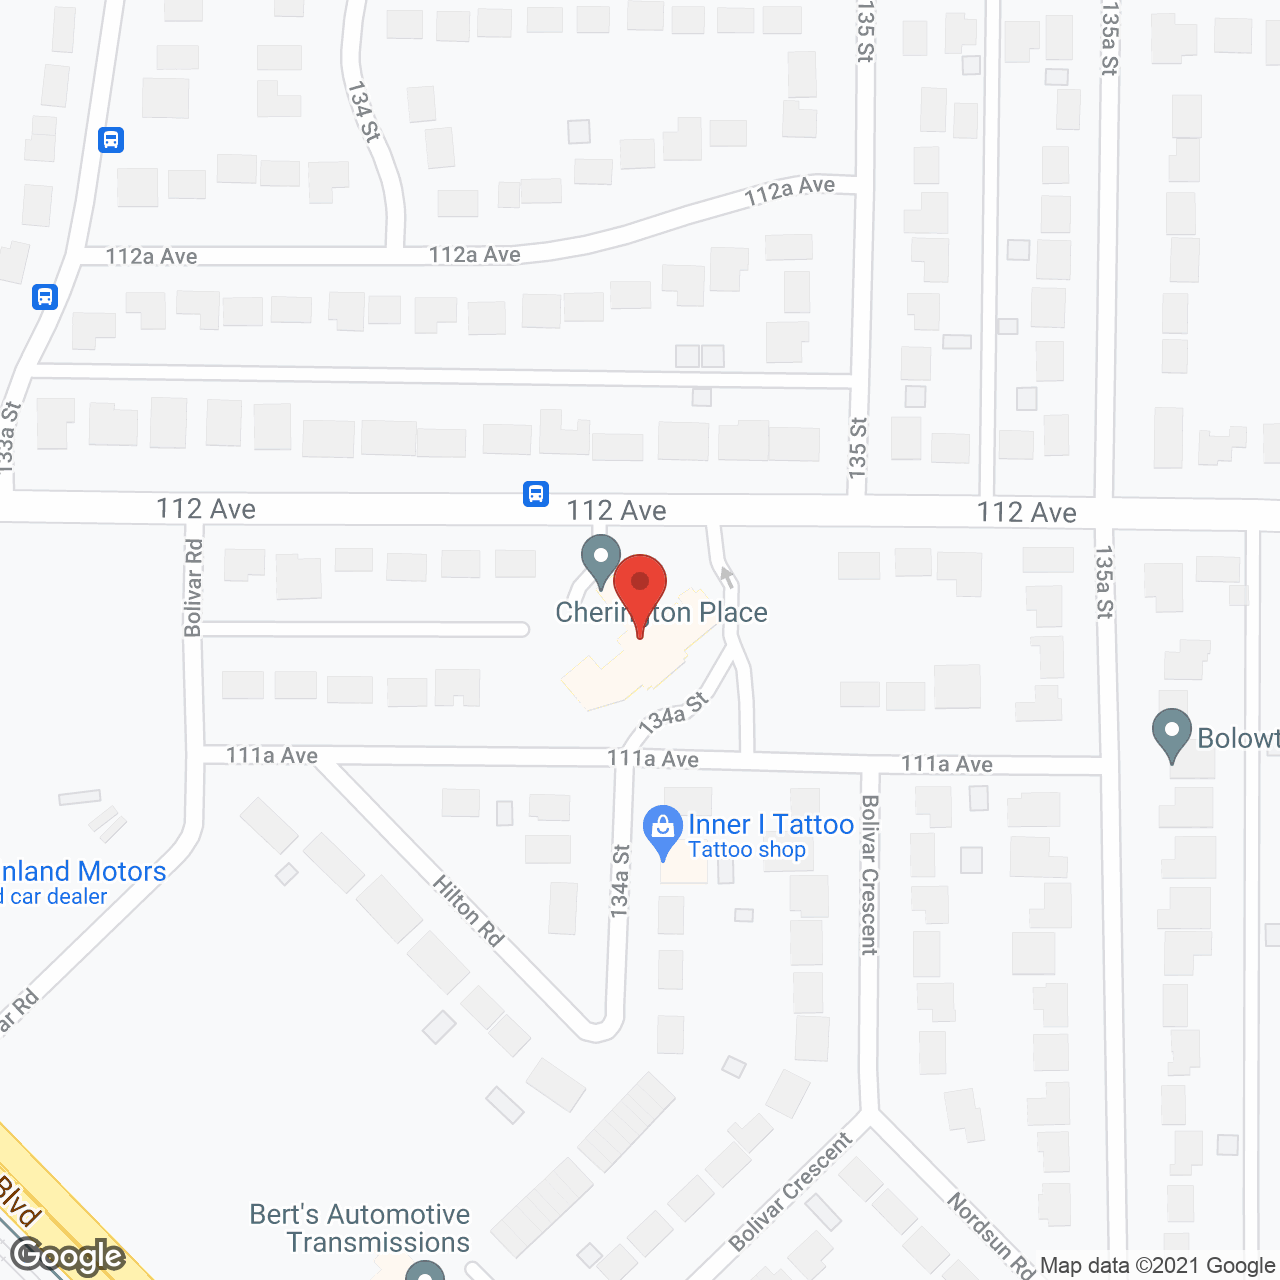 Cherington Place in google map